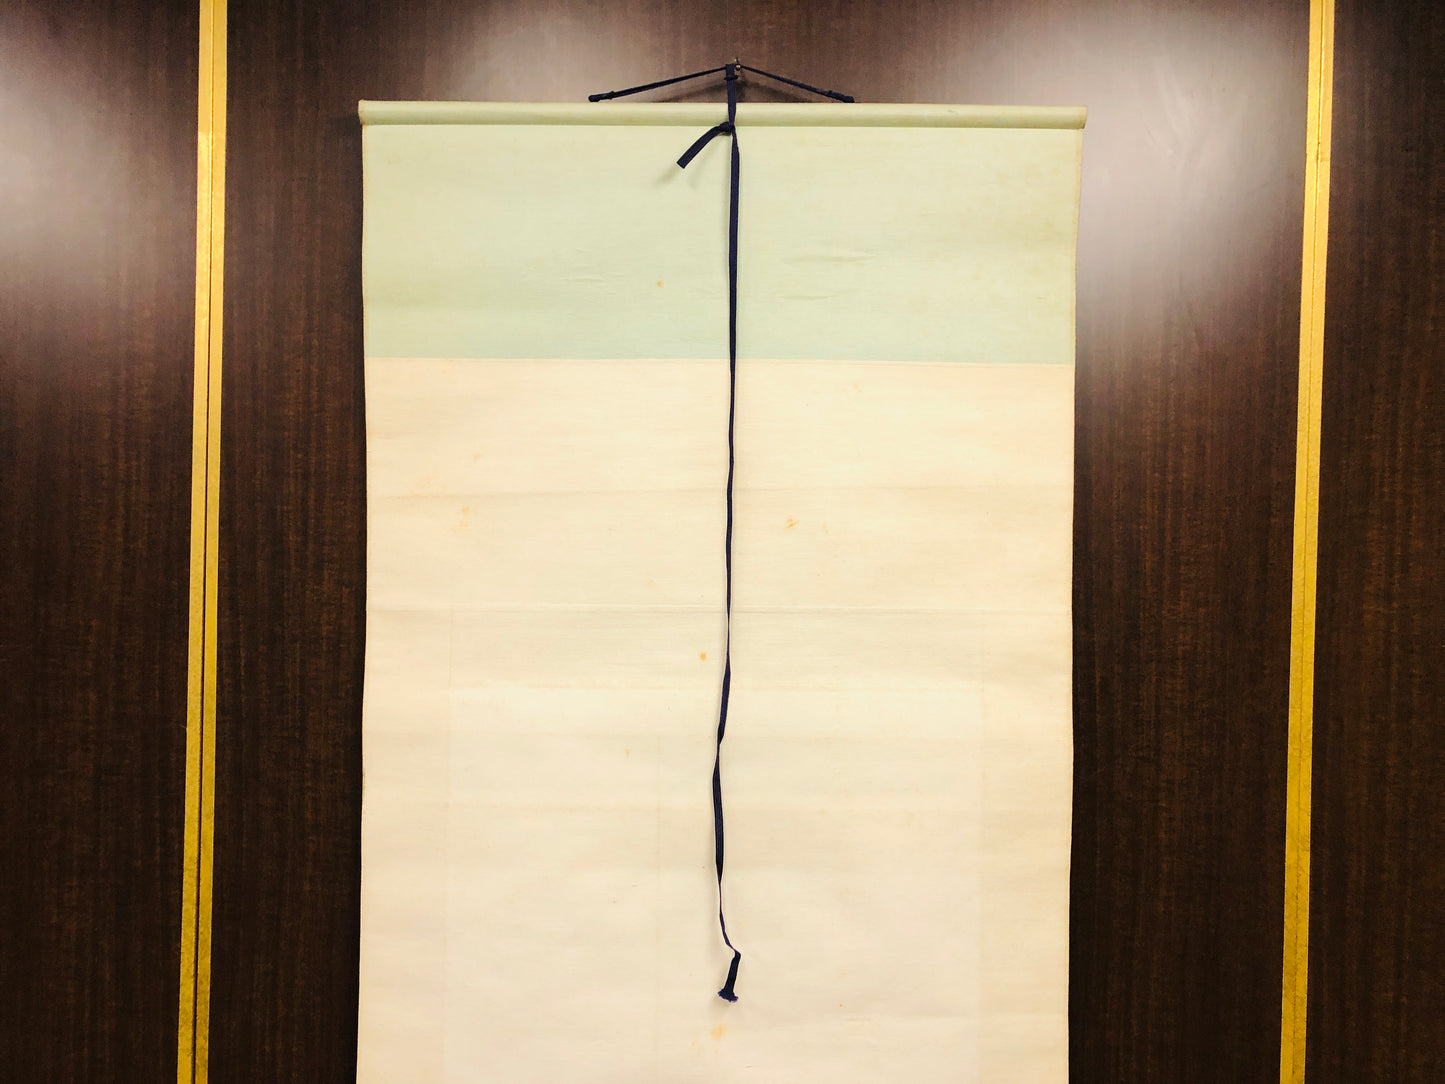 Y6546 [VIDEO] KAKEJIKU Tiger signed box Japan antique hanging scroll interior wall decor